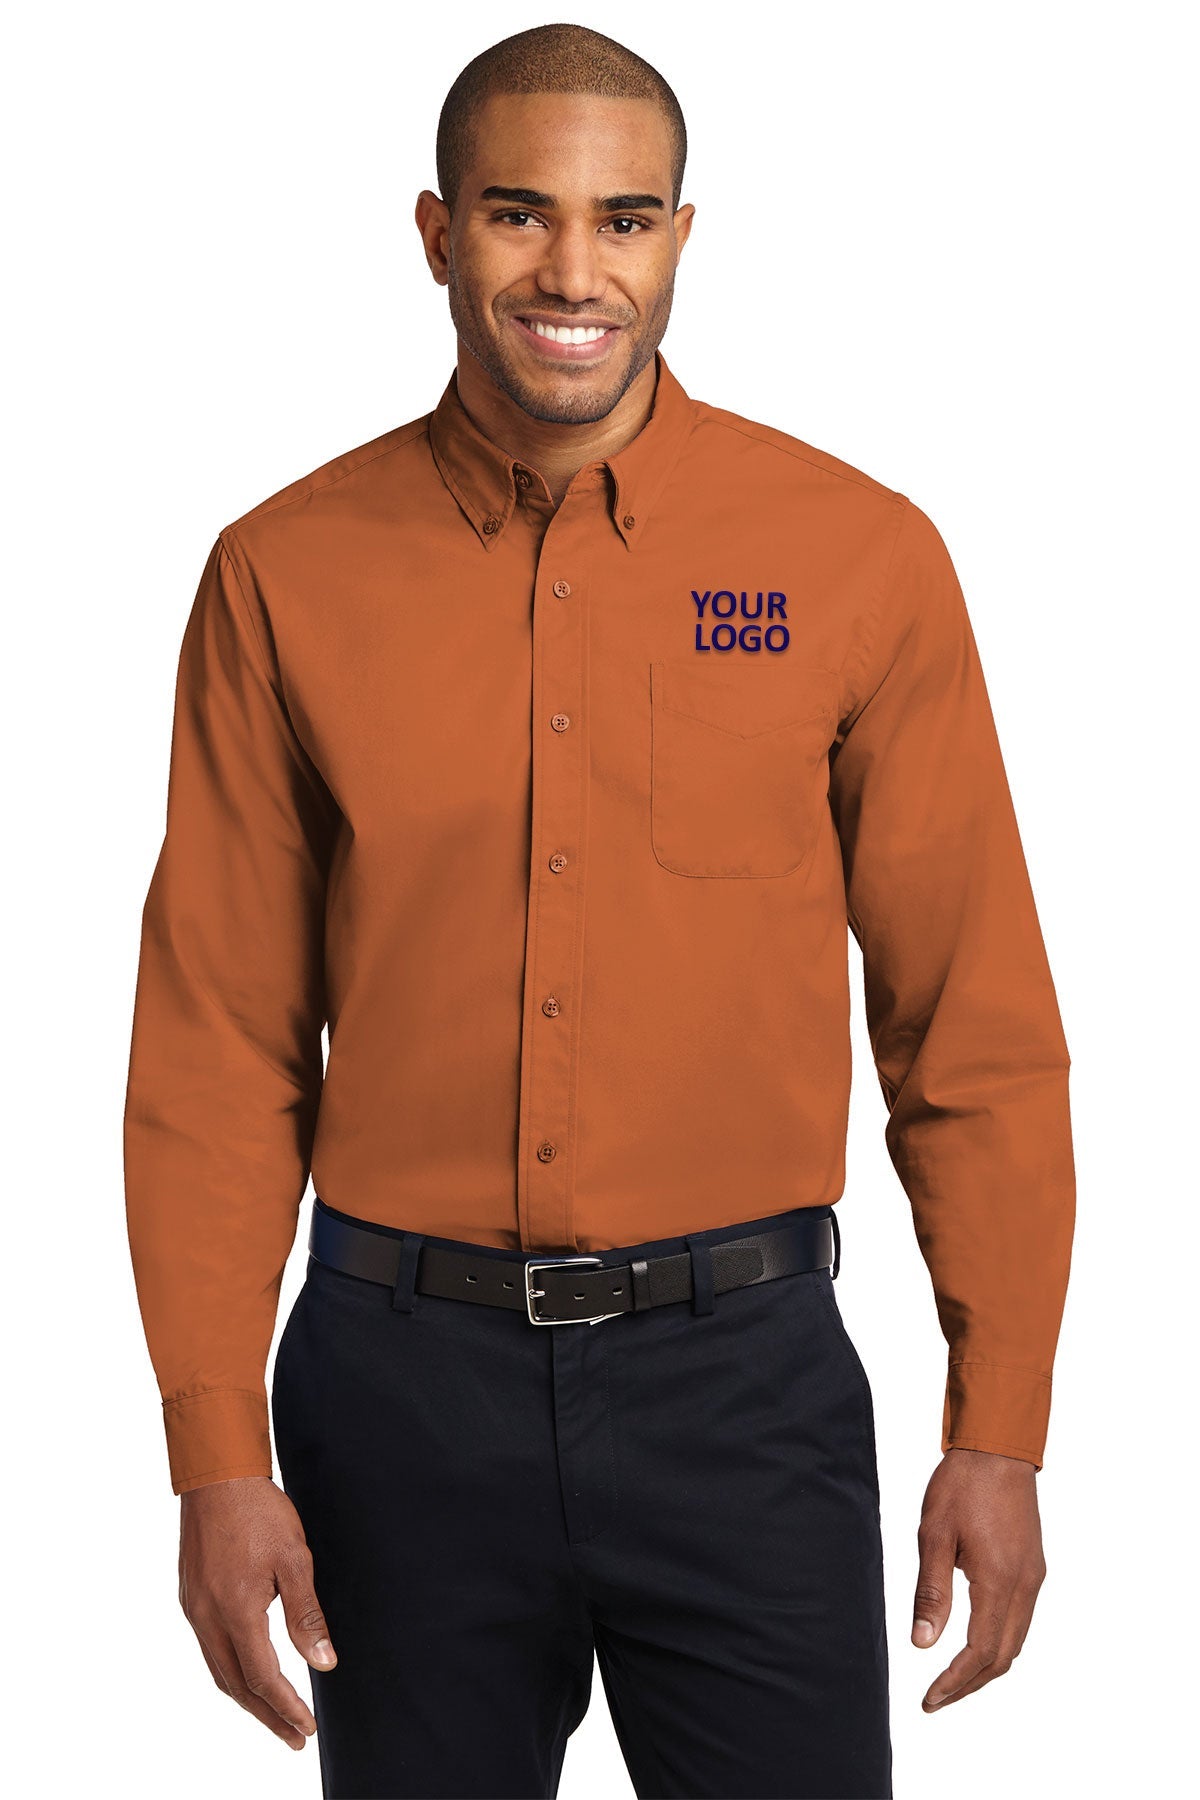 Port Authority Texas Orange/Light Stone S608 business shirts with company logo